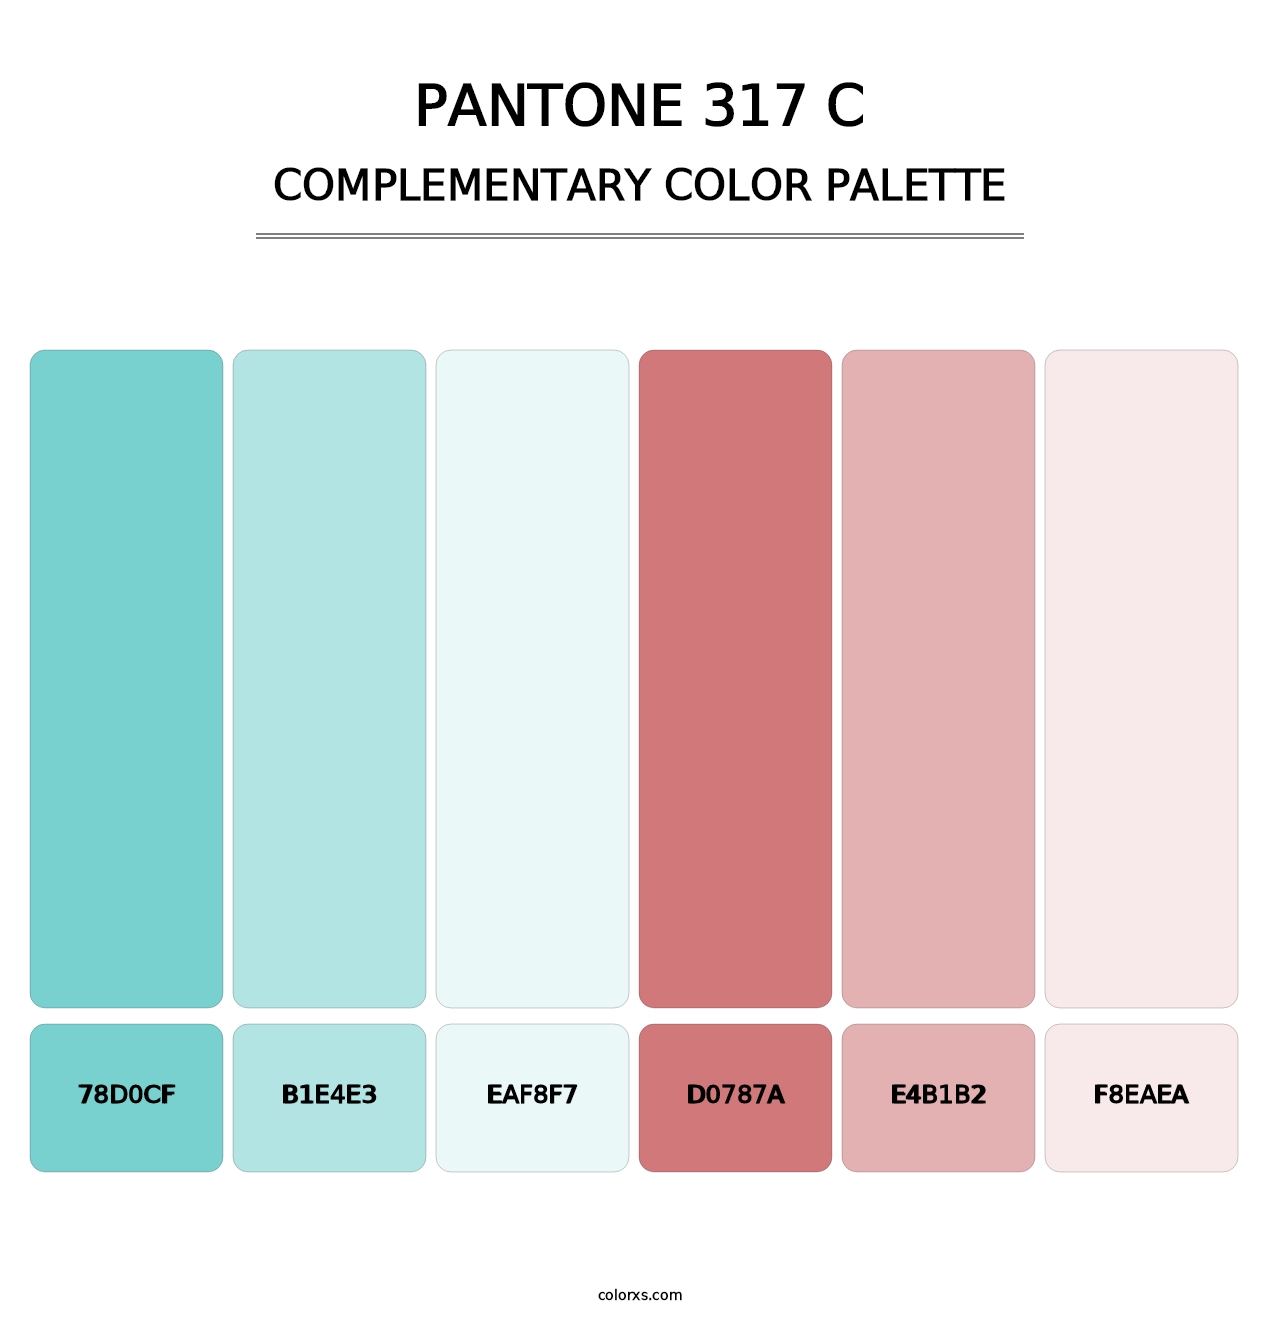 PANTONE 317 C - Complementary Color Palette